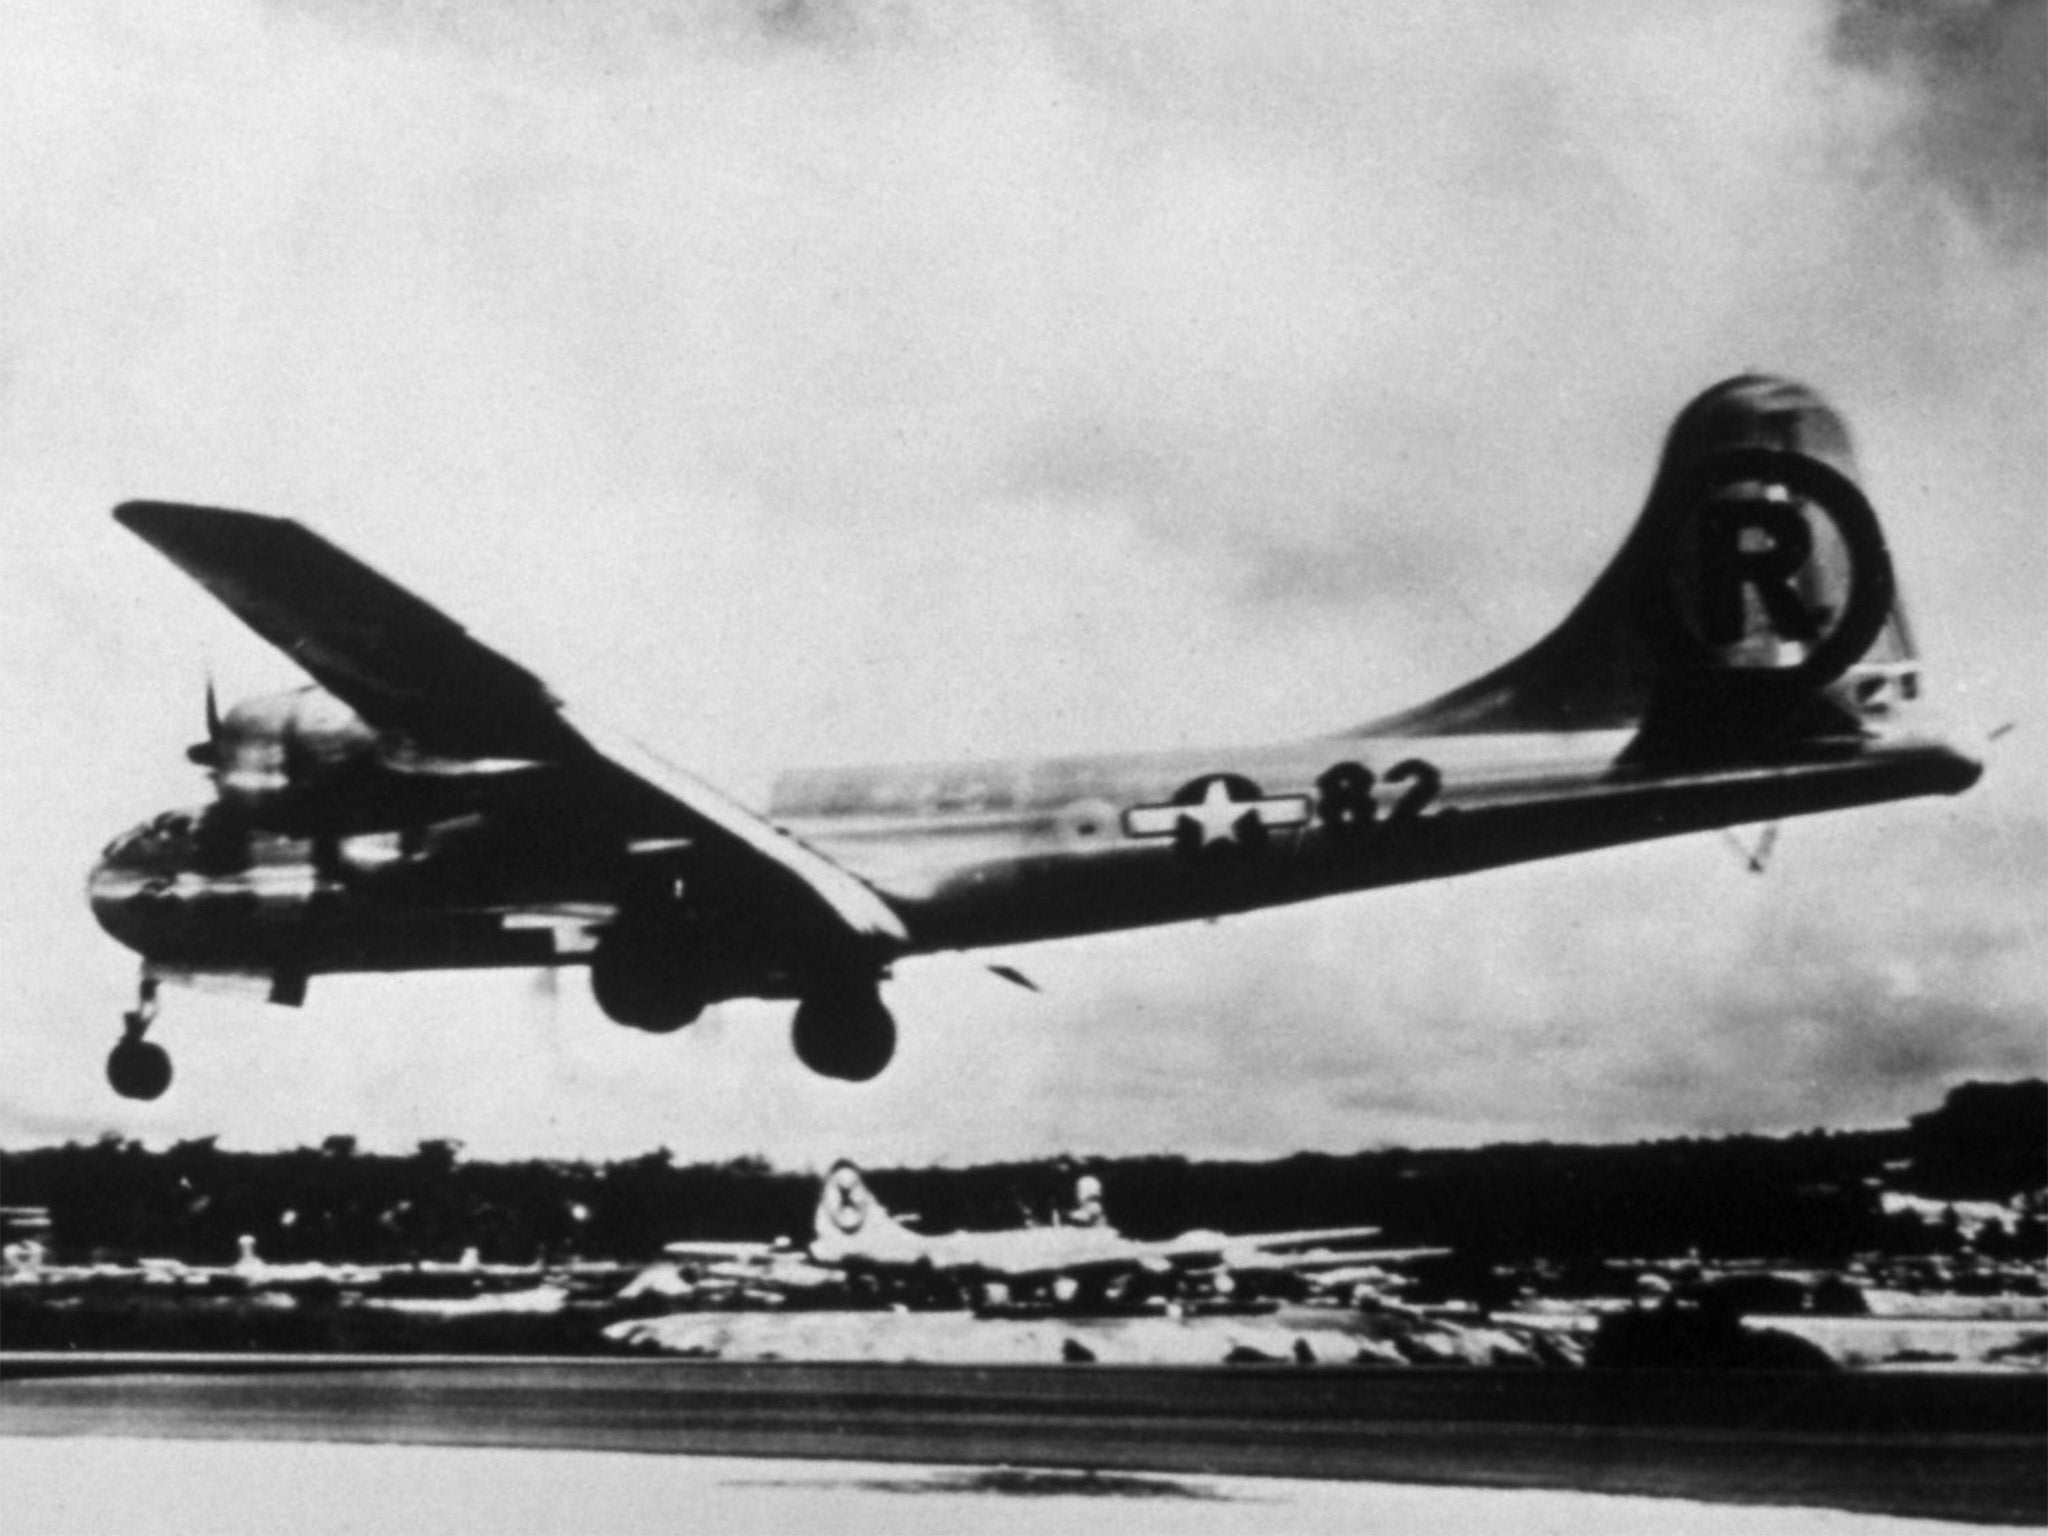 The B-29 bomber 'Enola Gay' in Japan, after bombing Hiroshima